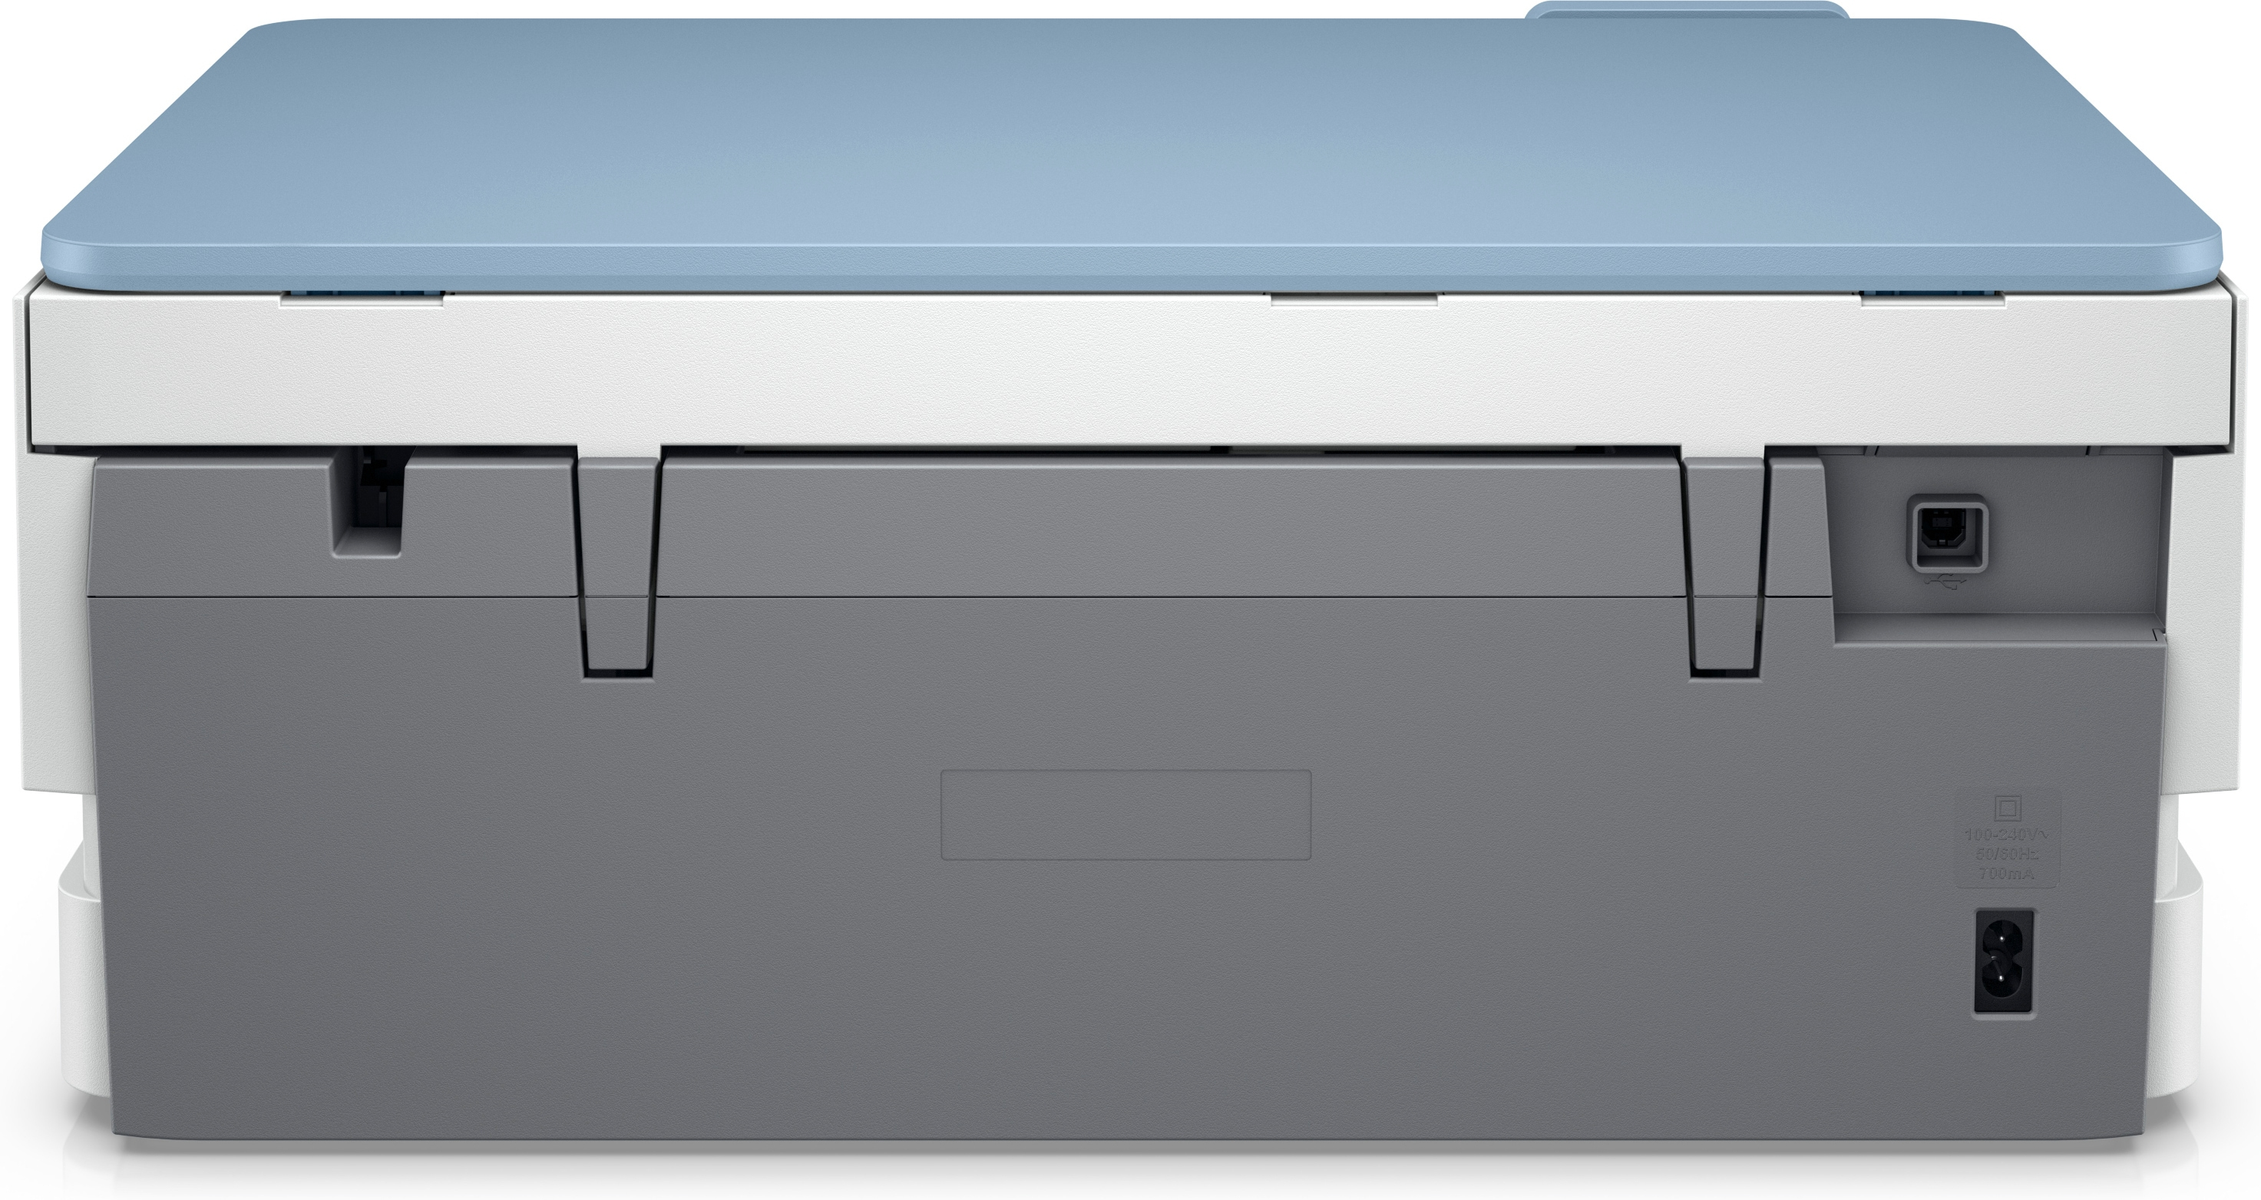 HP ENVY INSPIRE AIO PRINTER WLAN Inkjet Thermal (P) 7221E Multifunktionsdrucker